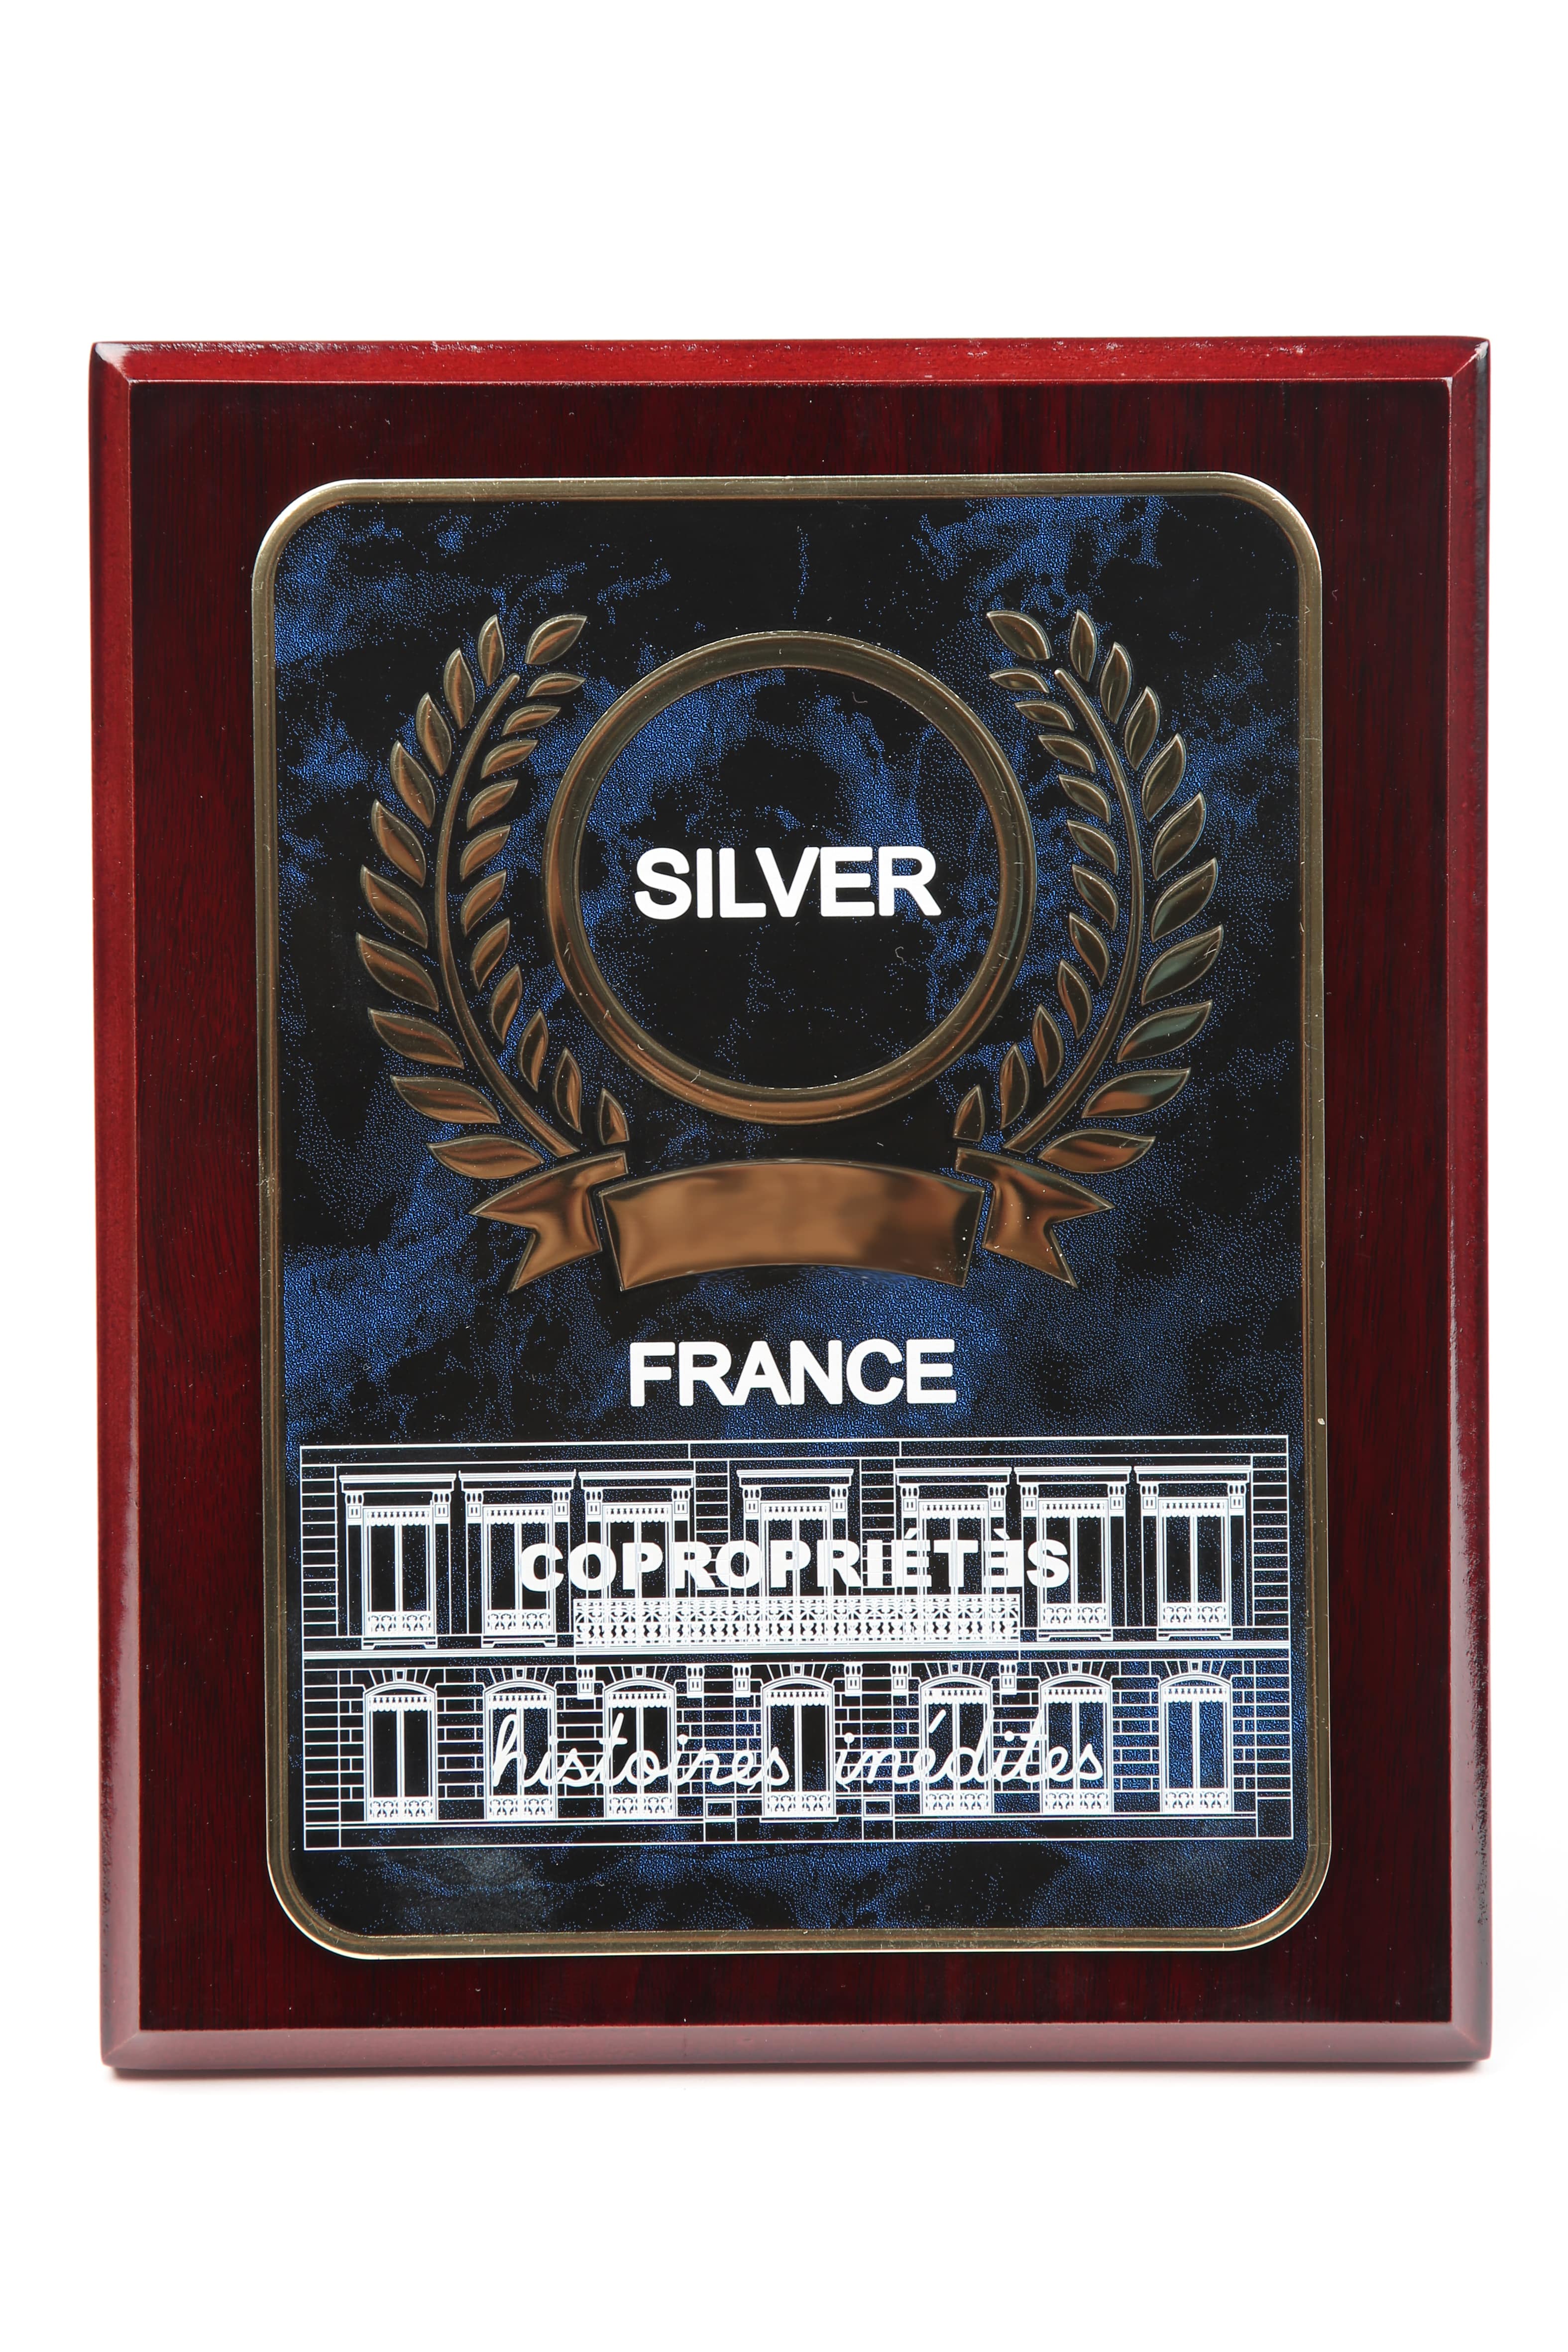 Trophée Silver